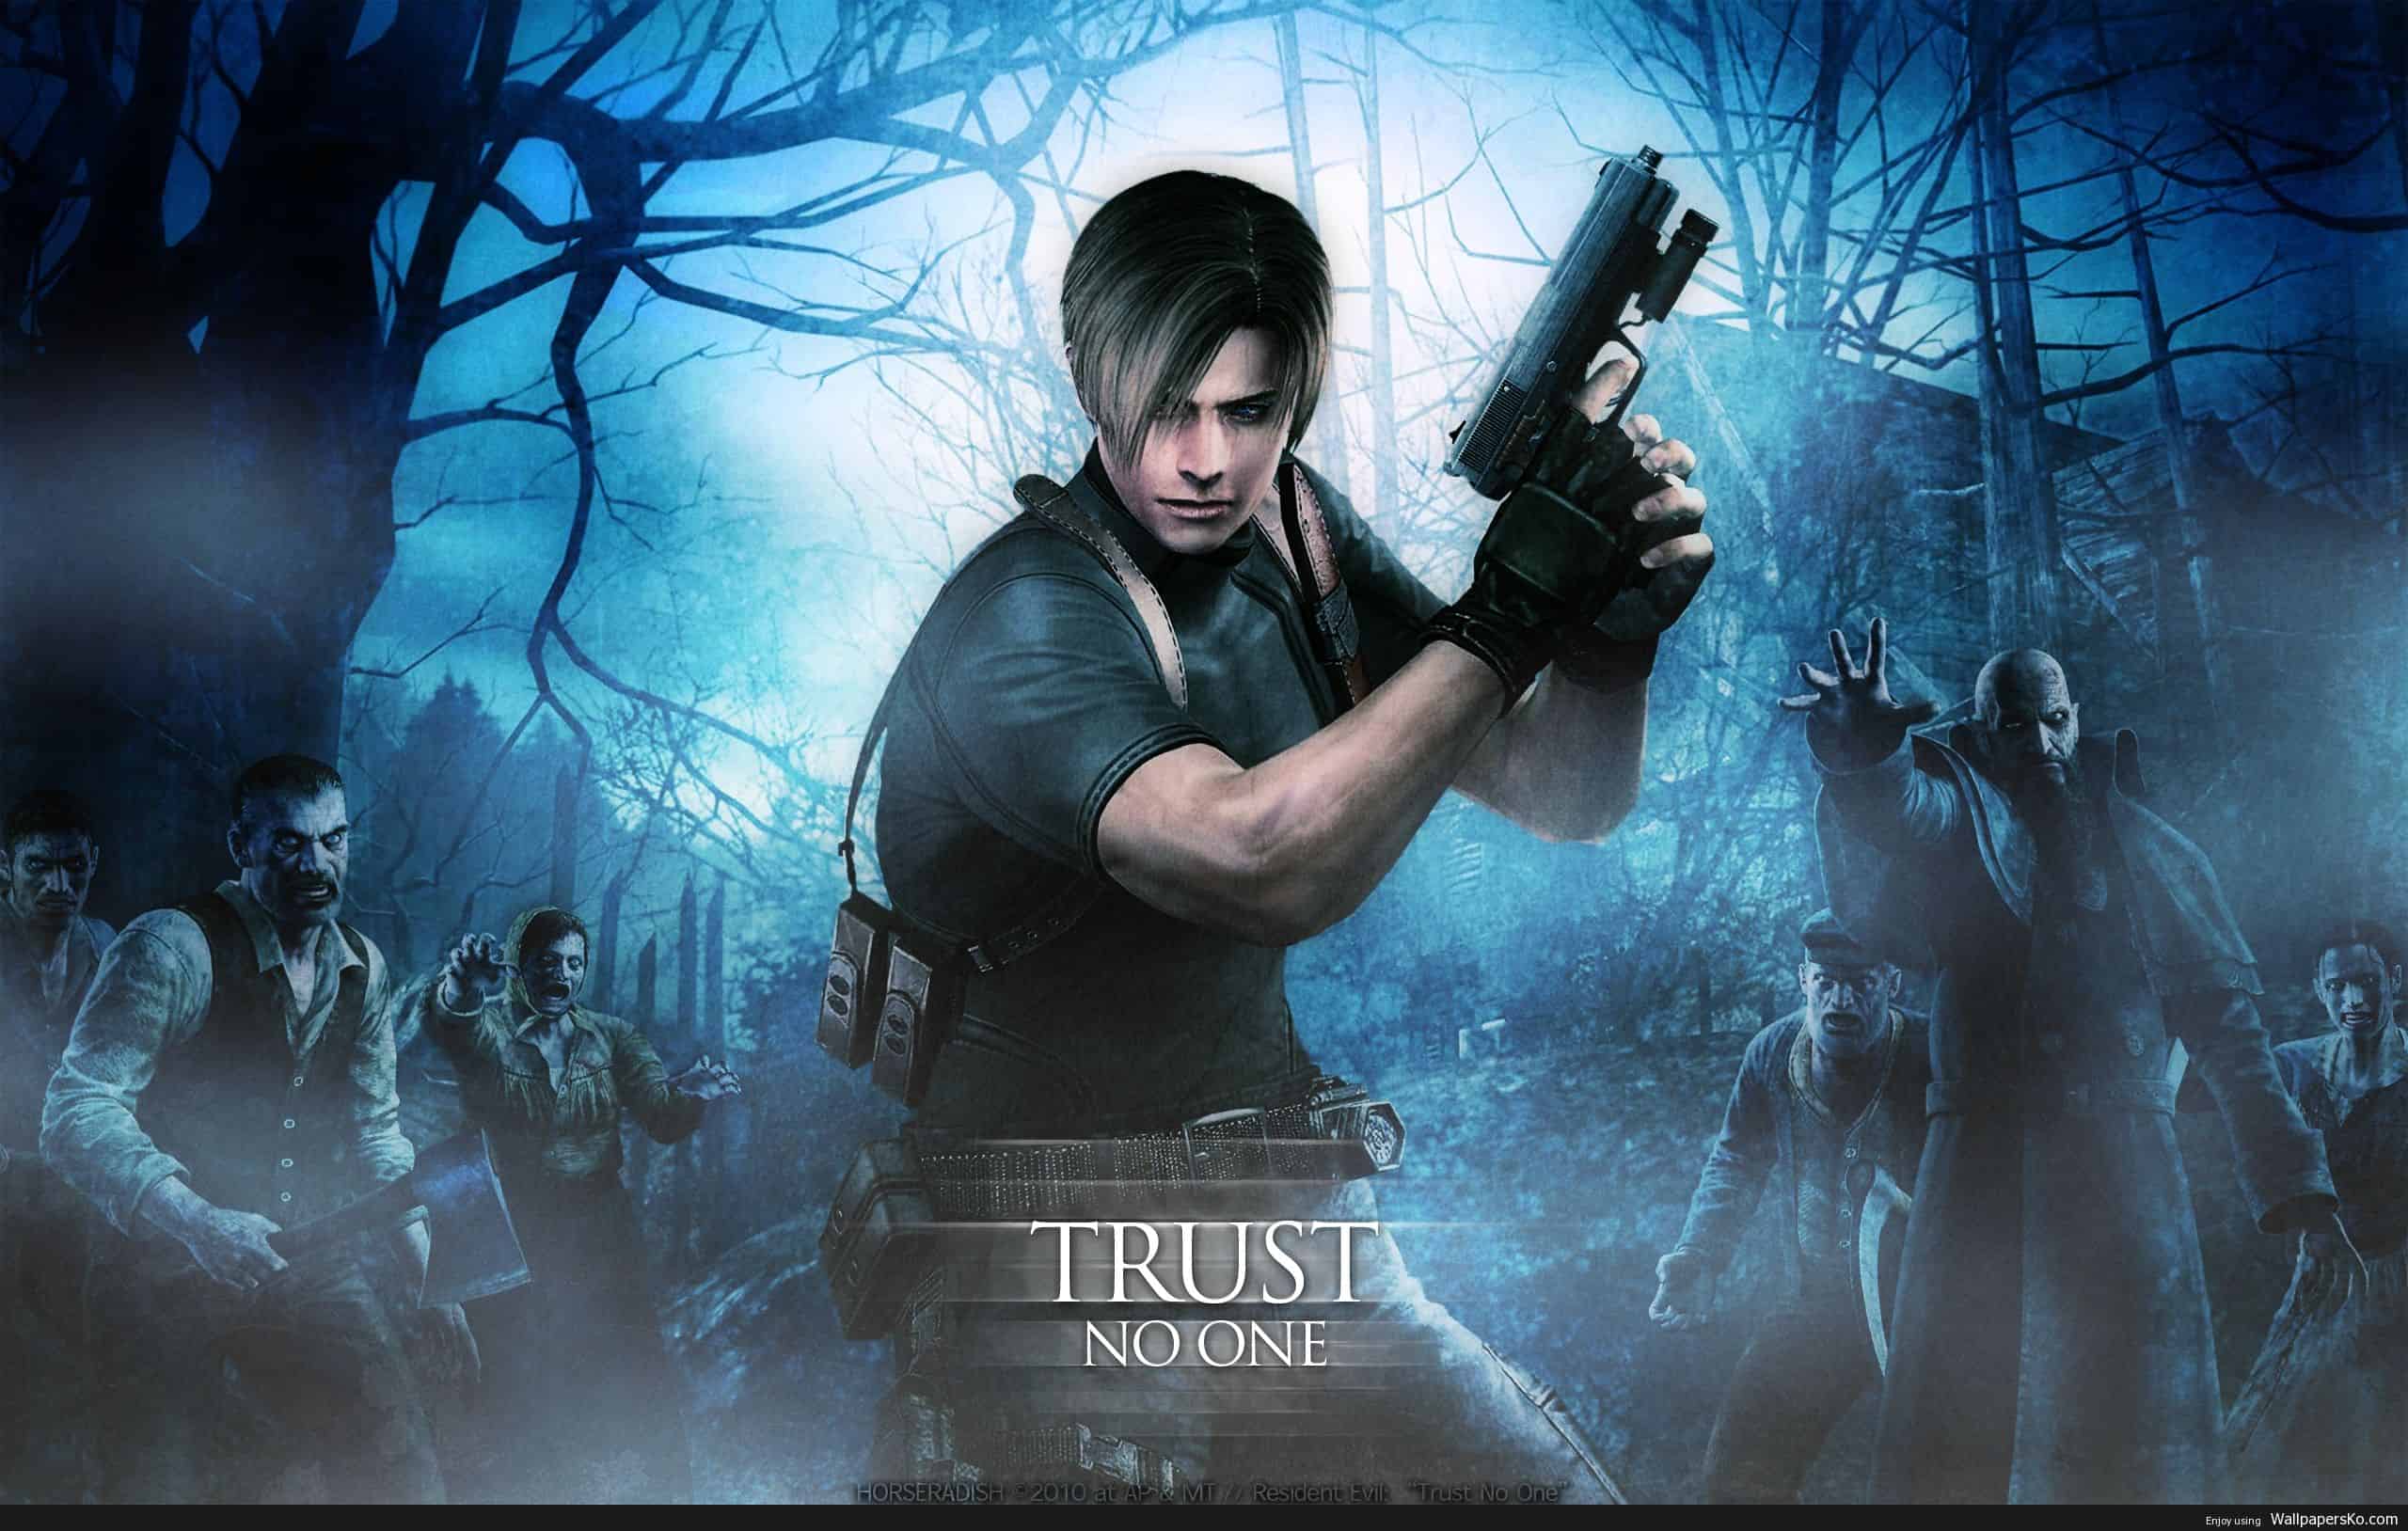 Resident Evil 4 PC Game - Free Download Full Version